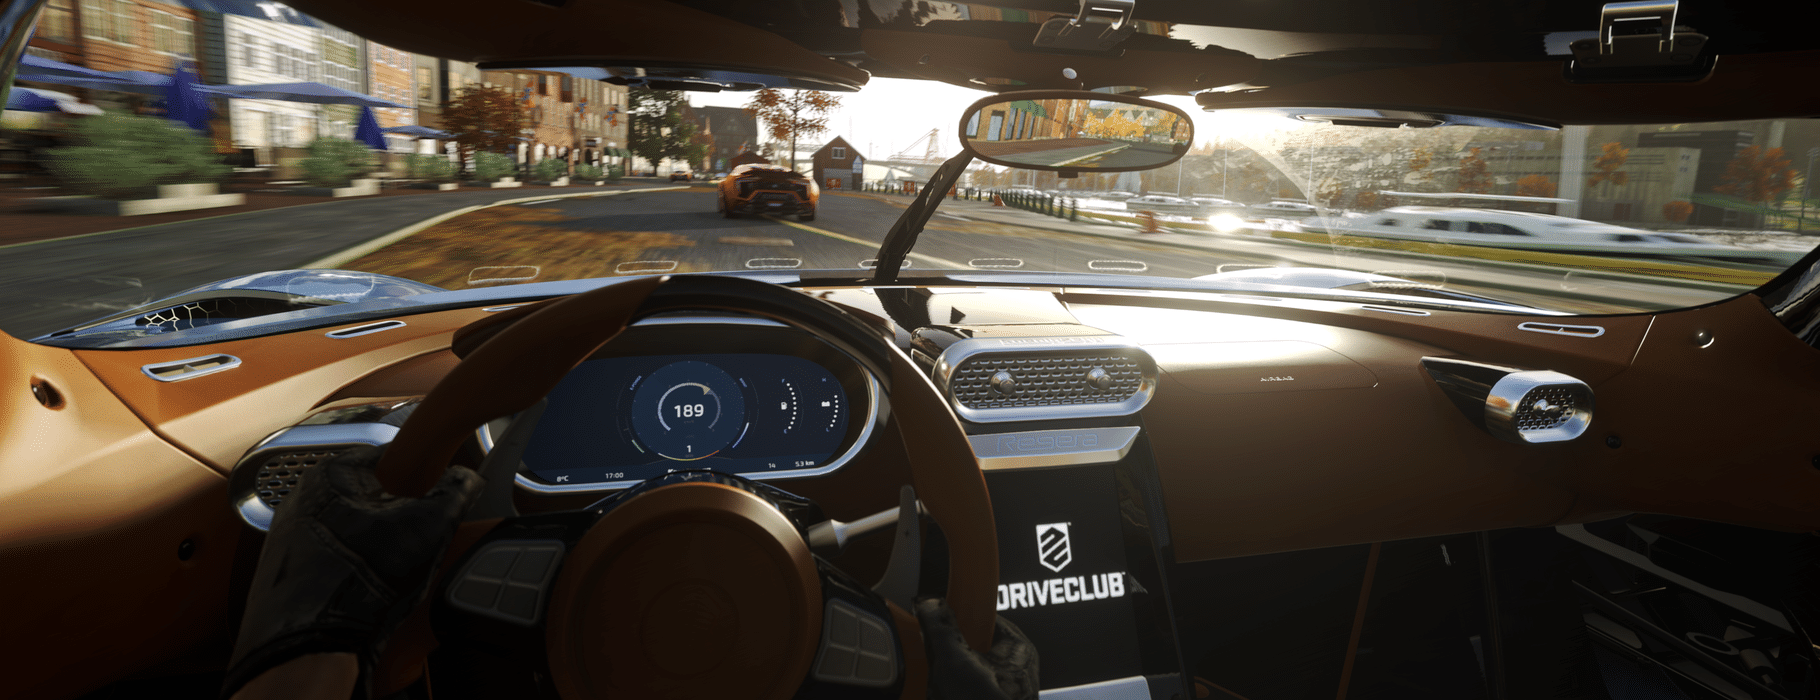 DriveClub VR screenshot